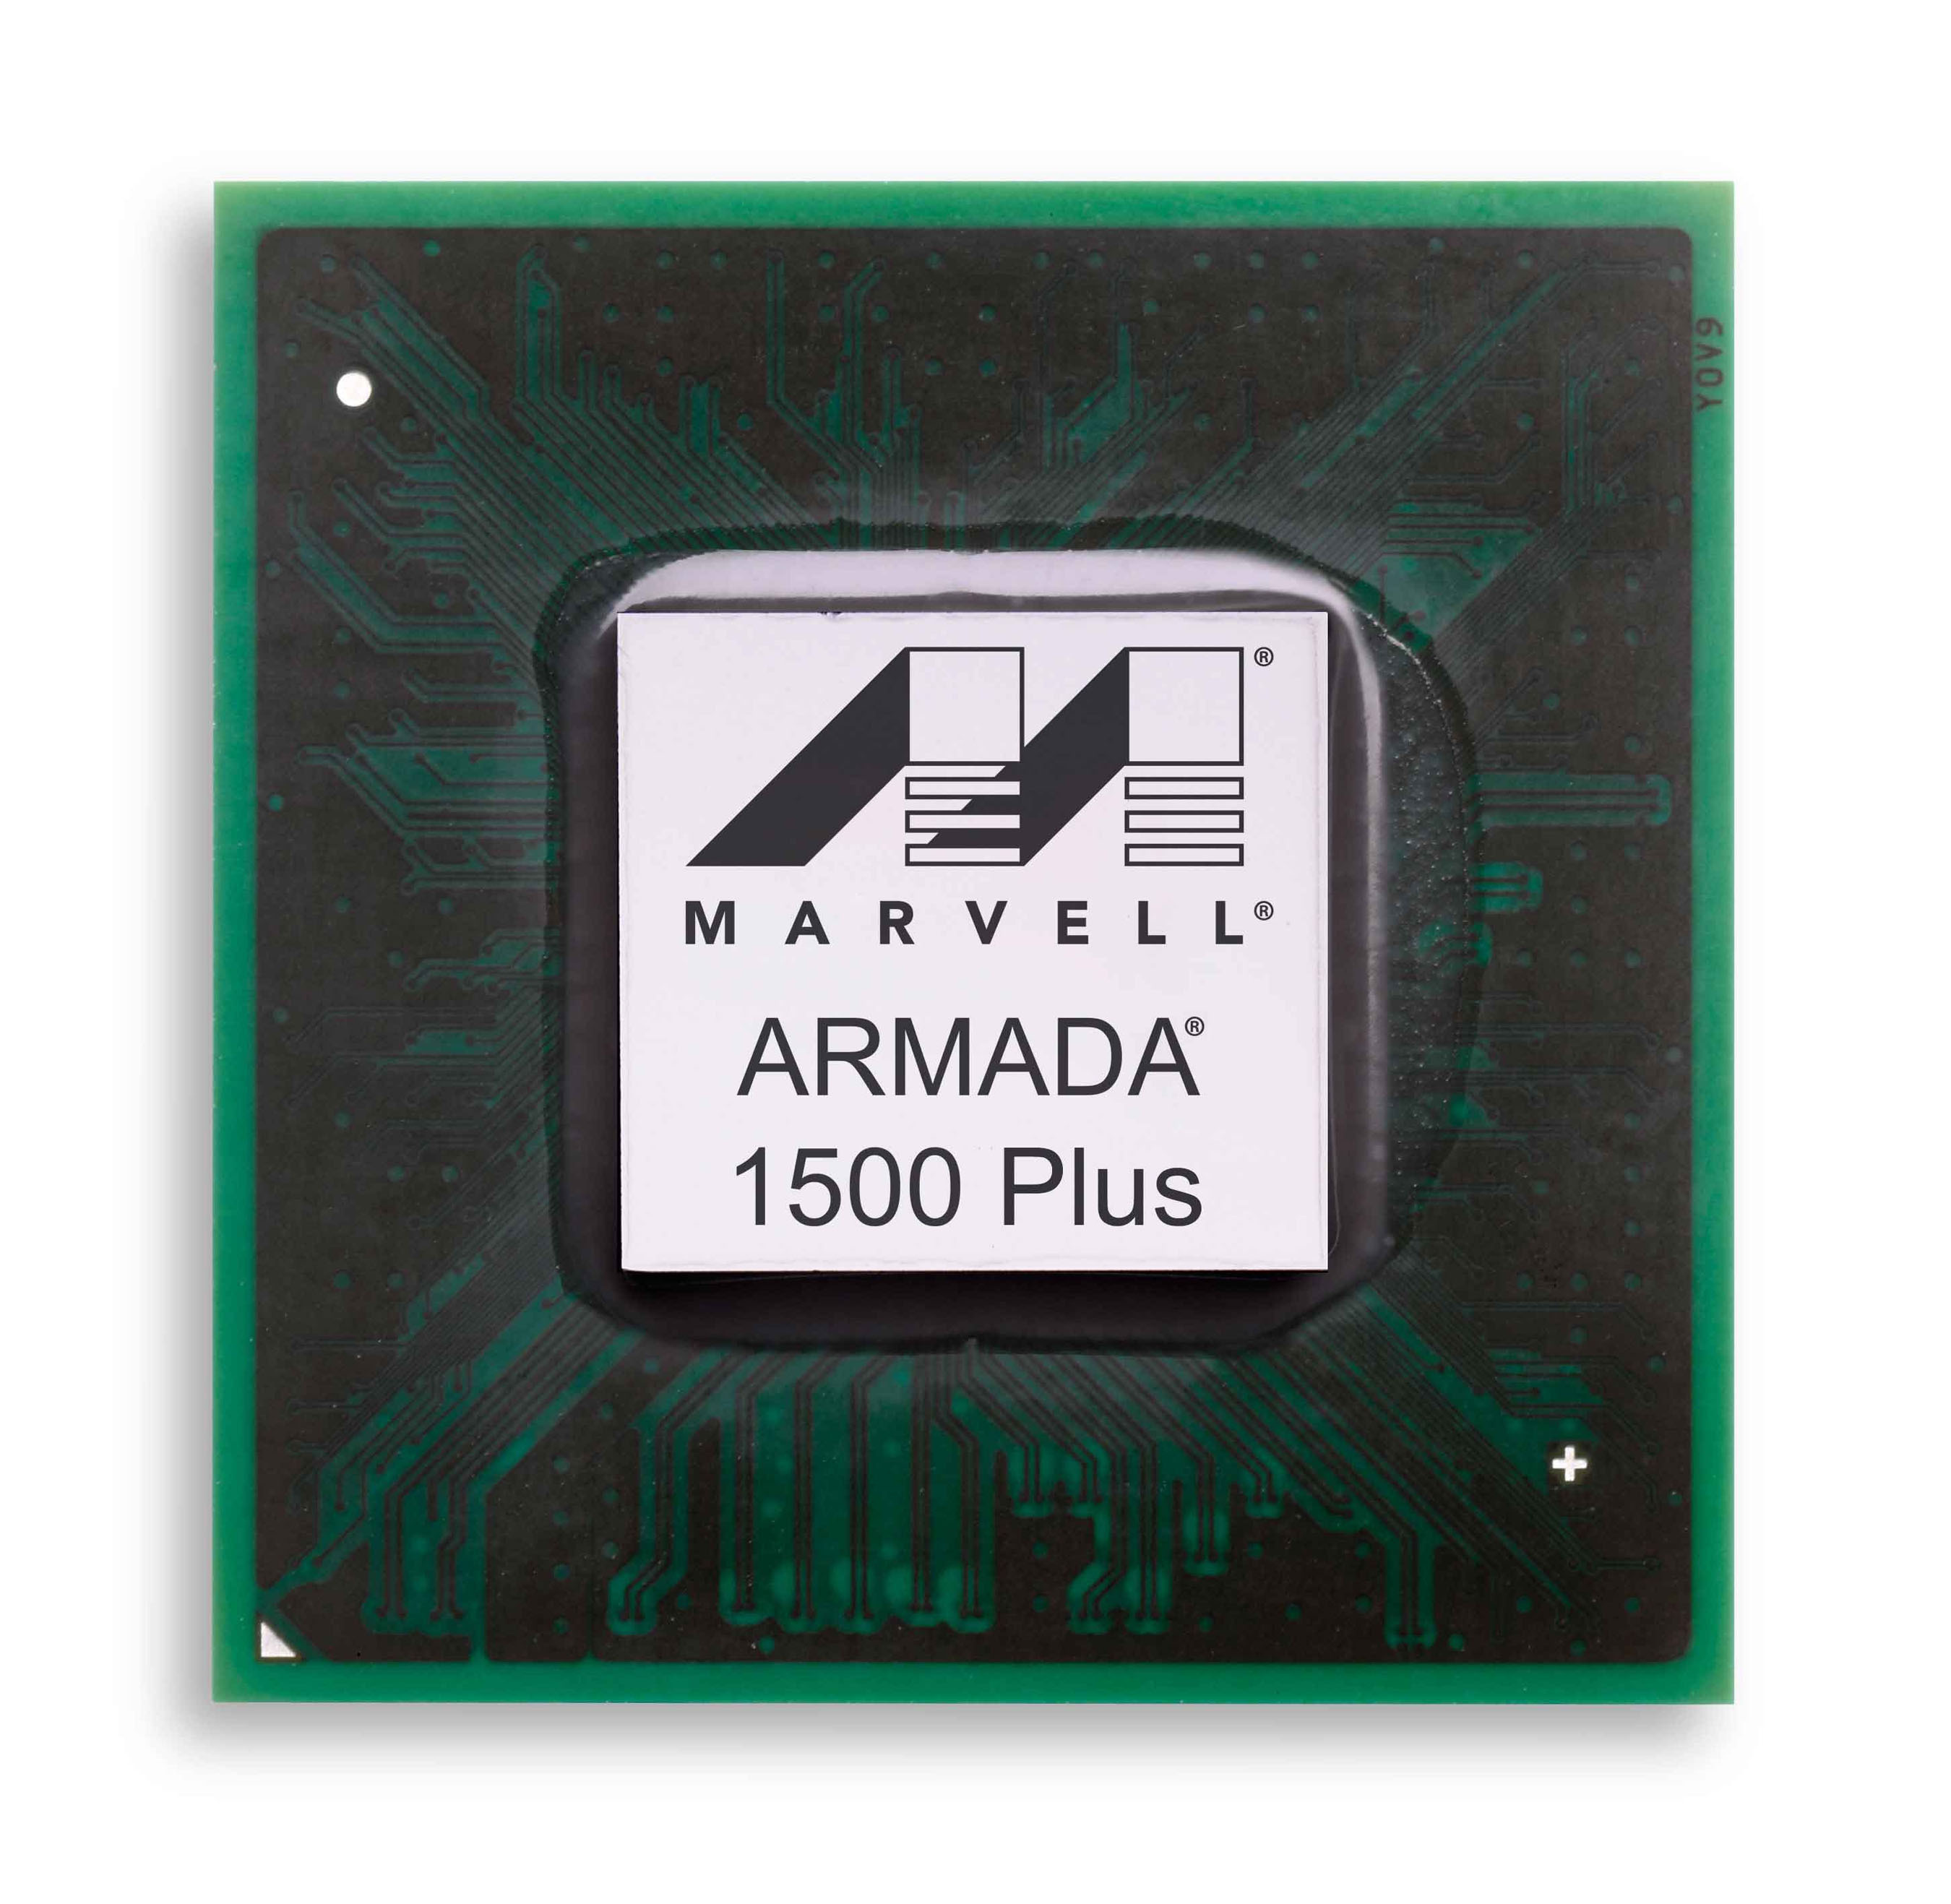 Marvell's ARMADA 1500 Plus HD Media System-on-Chip. (PRNewsFoto/Marvell) (PRNewsFoto/MARVELL)